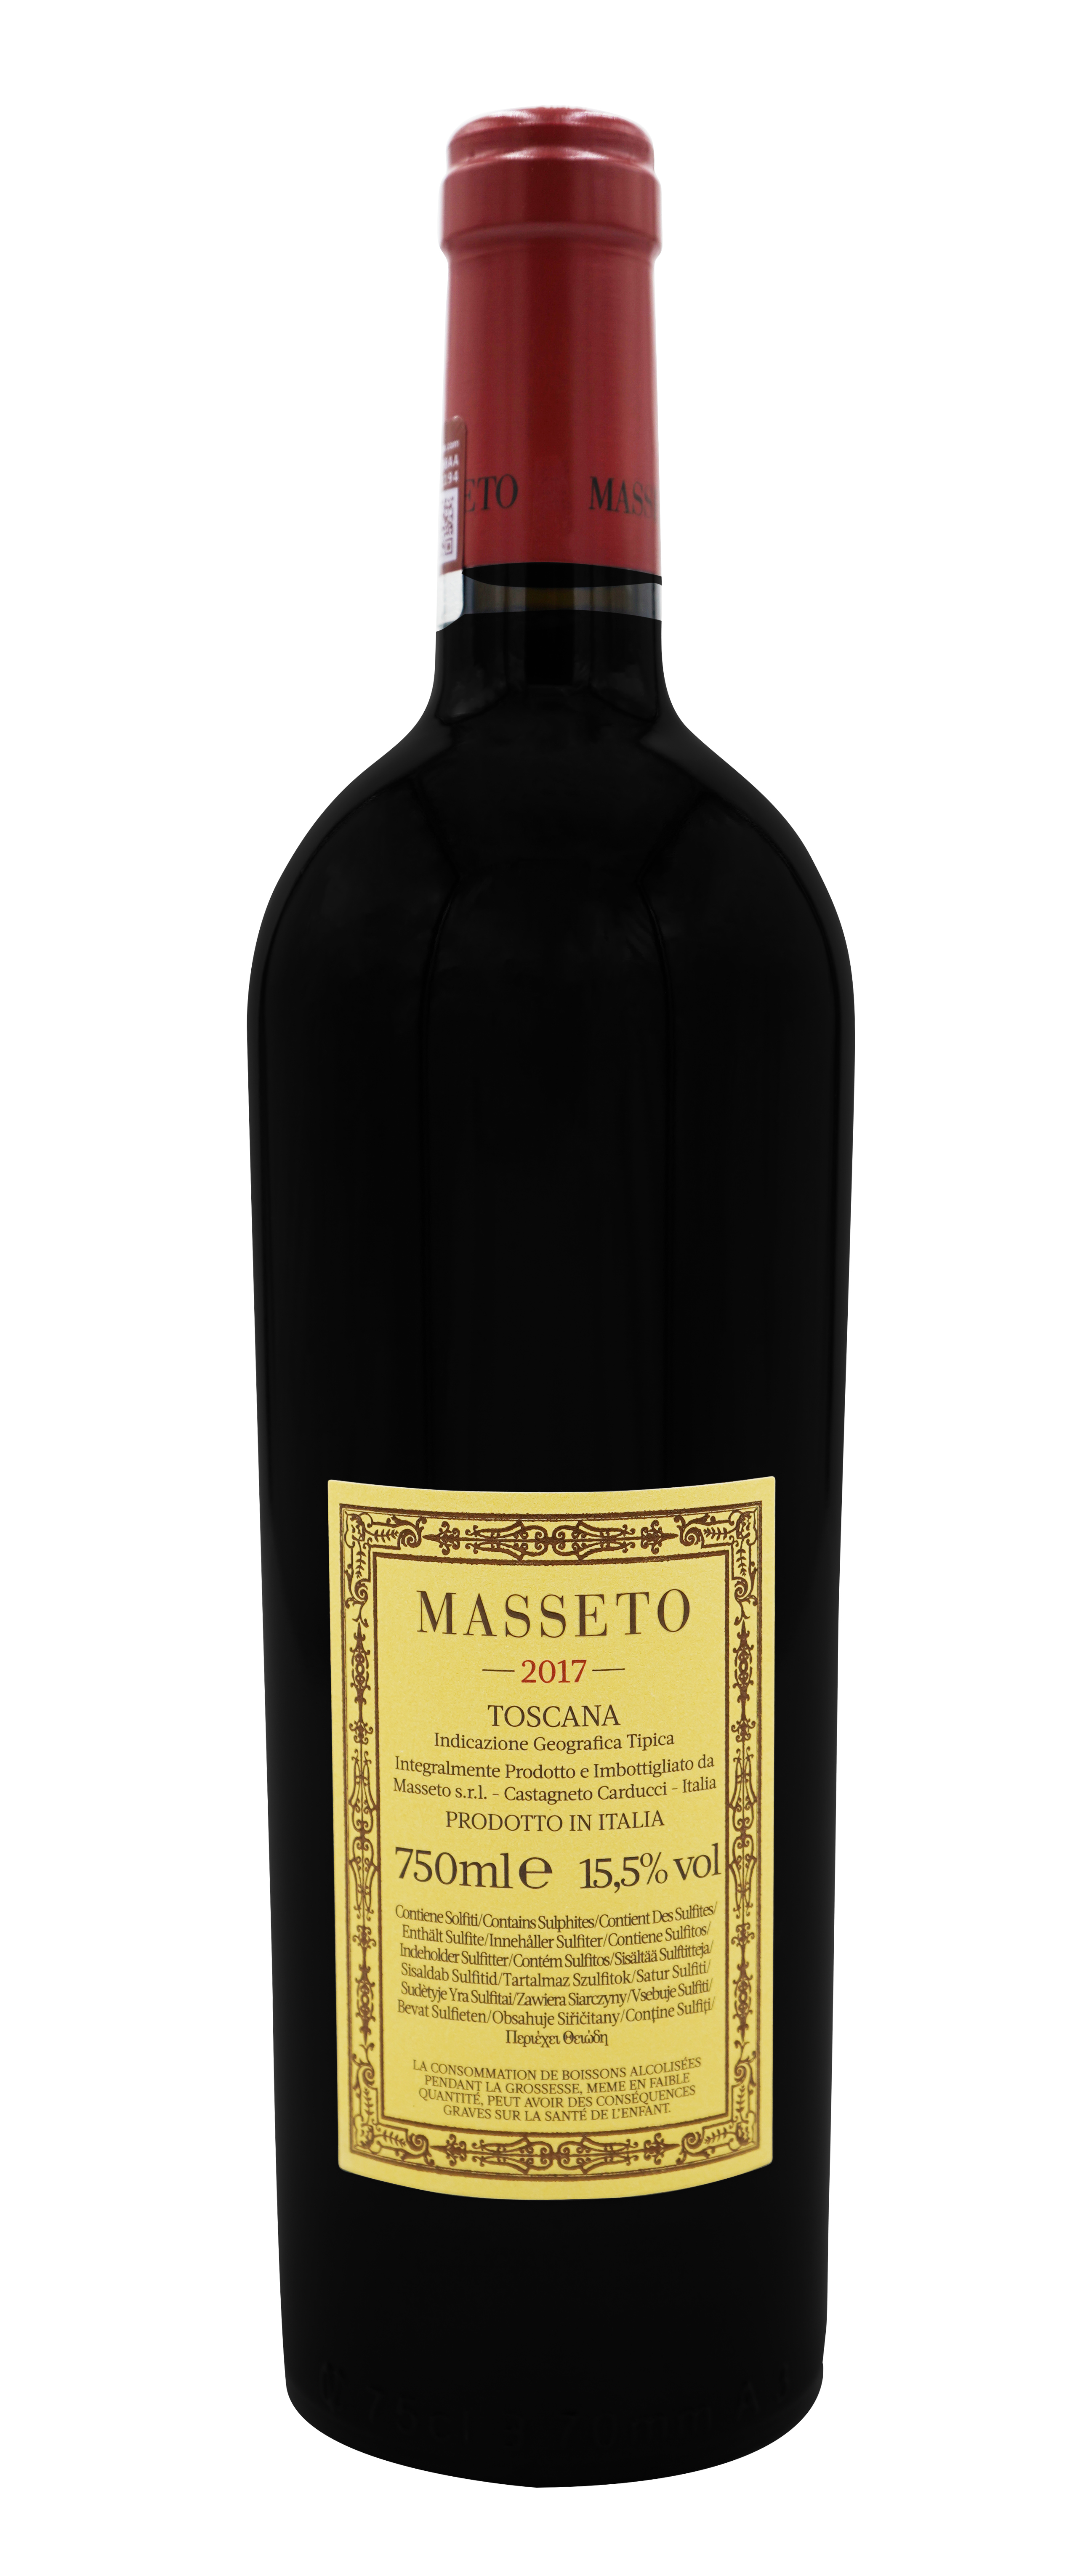 Masseto 2017 - back label